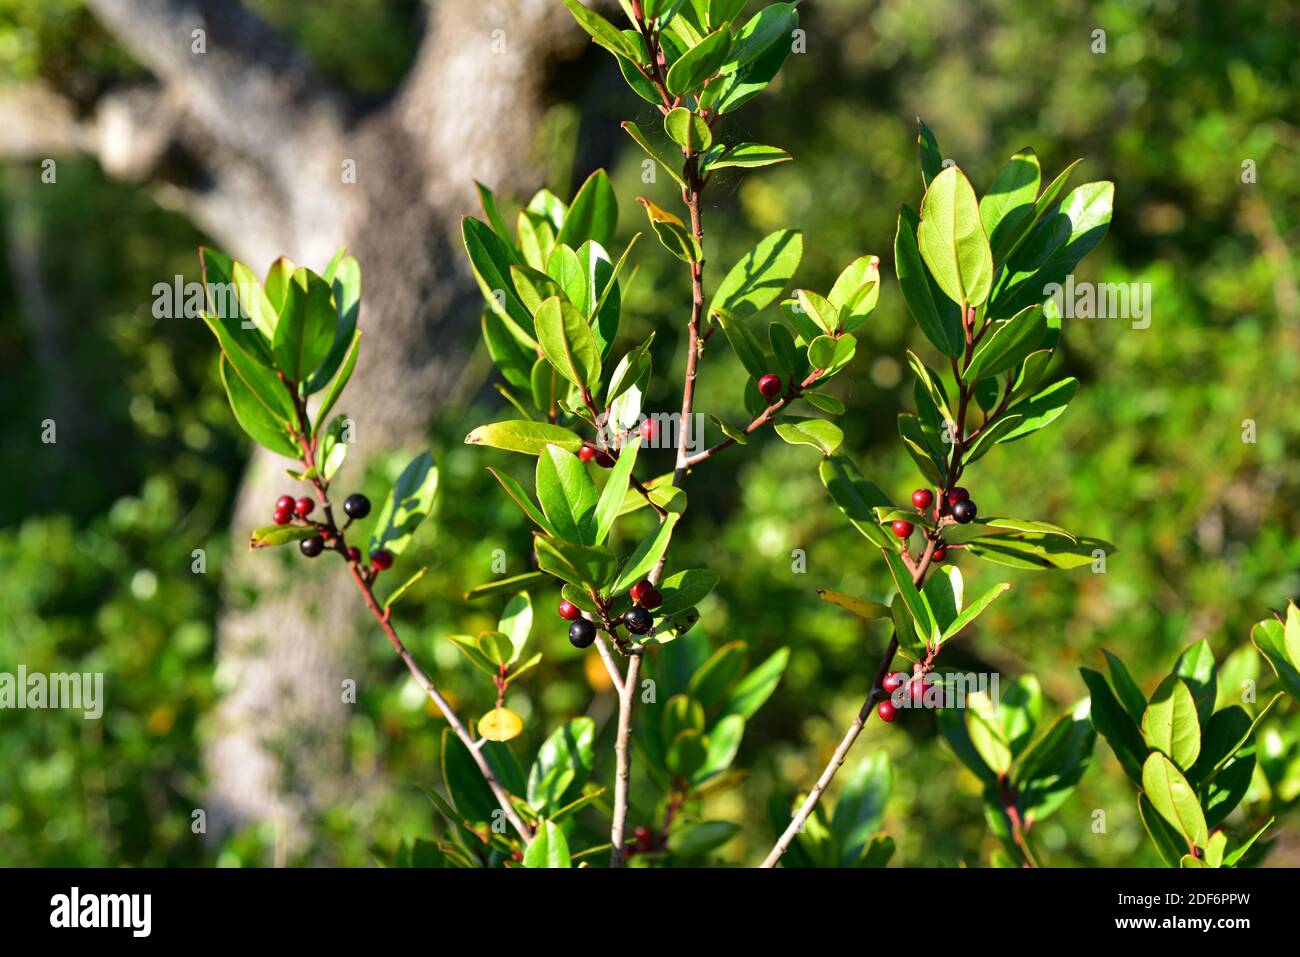 Mediterranean buckthorn (Rhamnus alaternus) is an evergreen shrub native to Mediterranean Basin. Fruits and leaves detail. This photo was taken in Stock Photo